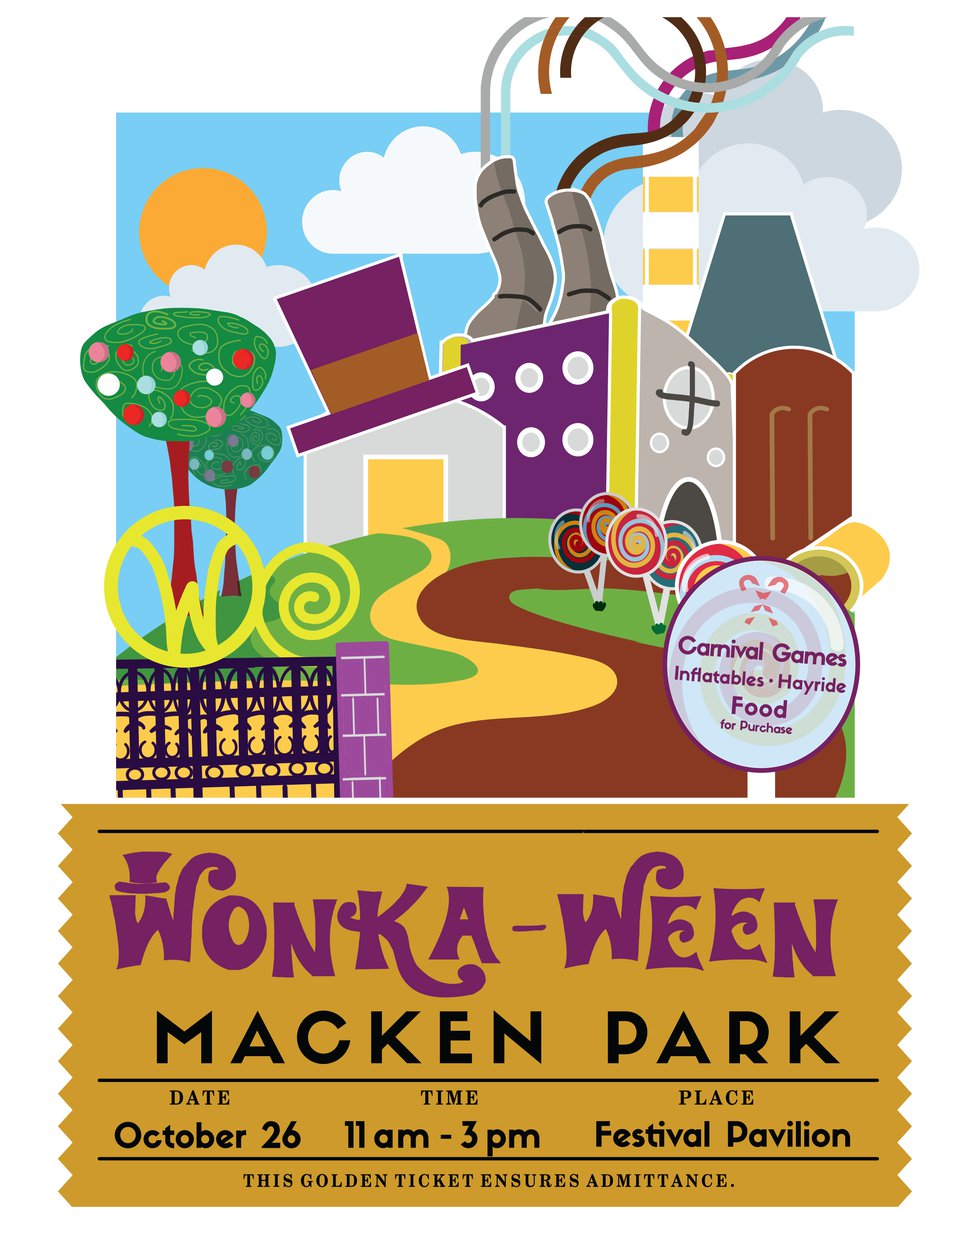 Wonka-Ween Concept_alt2